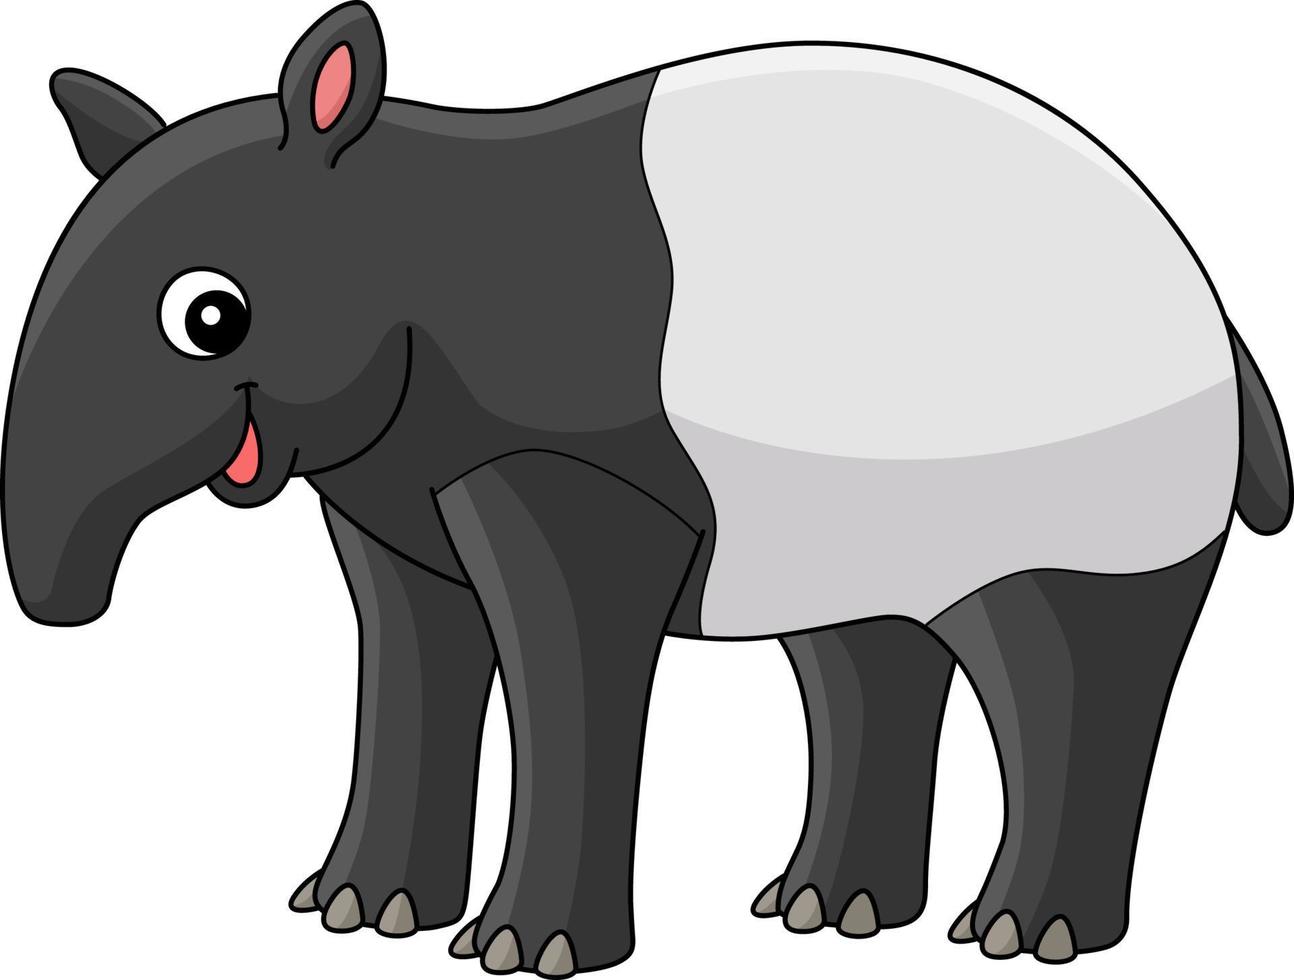 Tapir Animal Cartoon Colored Clipart Illustration vector